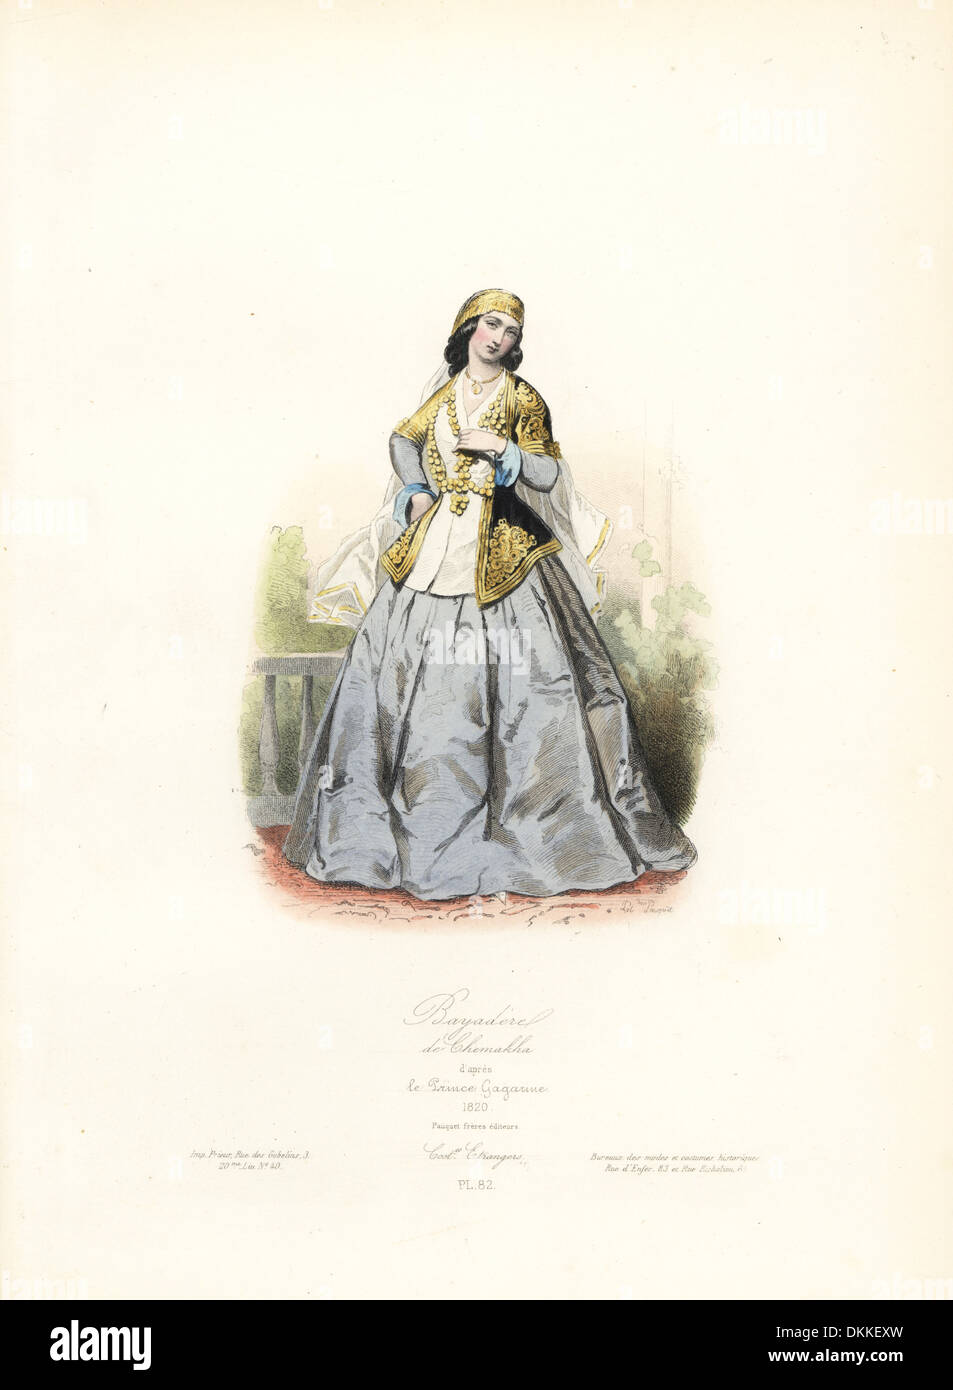 Dancing girl of Shemakha, Azerbaijan, 1820, after Prince Gagarin. Stock Photo